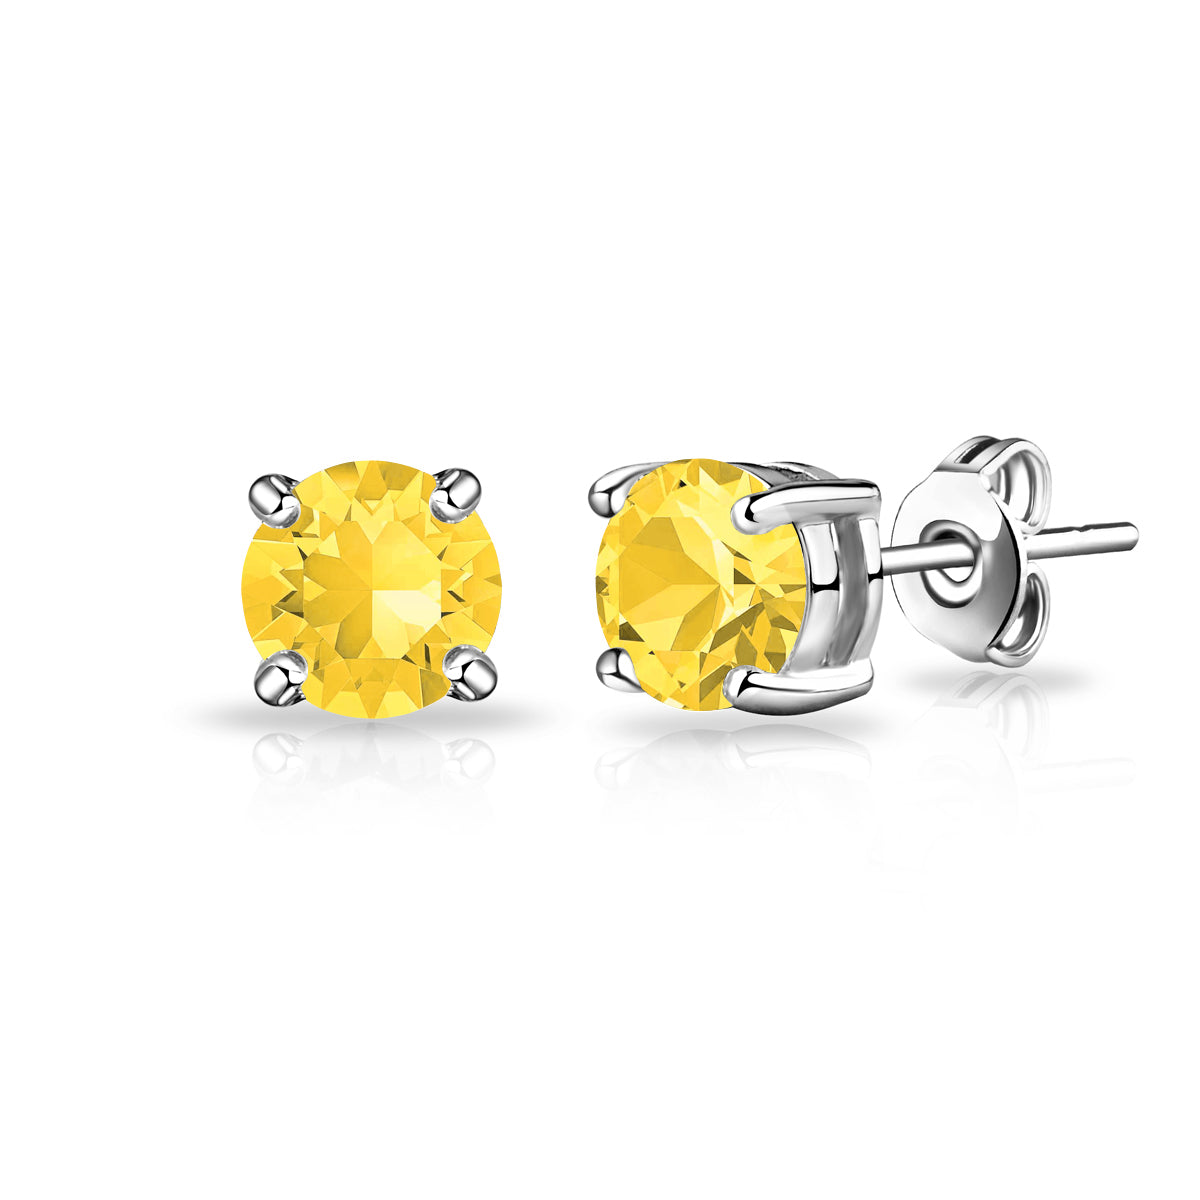 Yellow Stud Earrings Created with Zircondia® Crystals by Philip Jones Jewellery